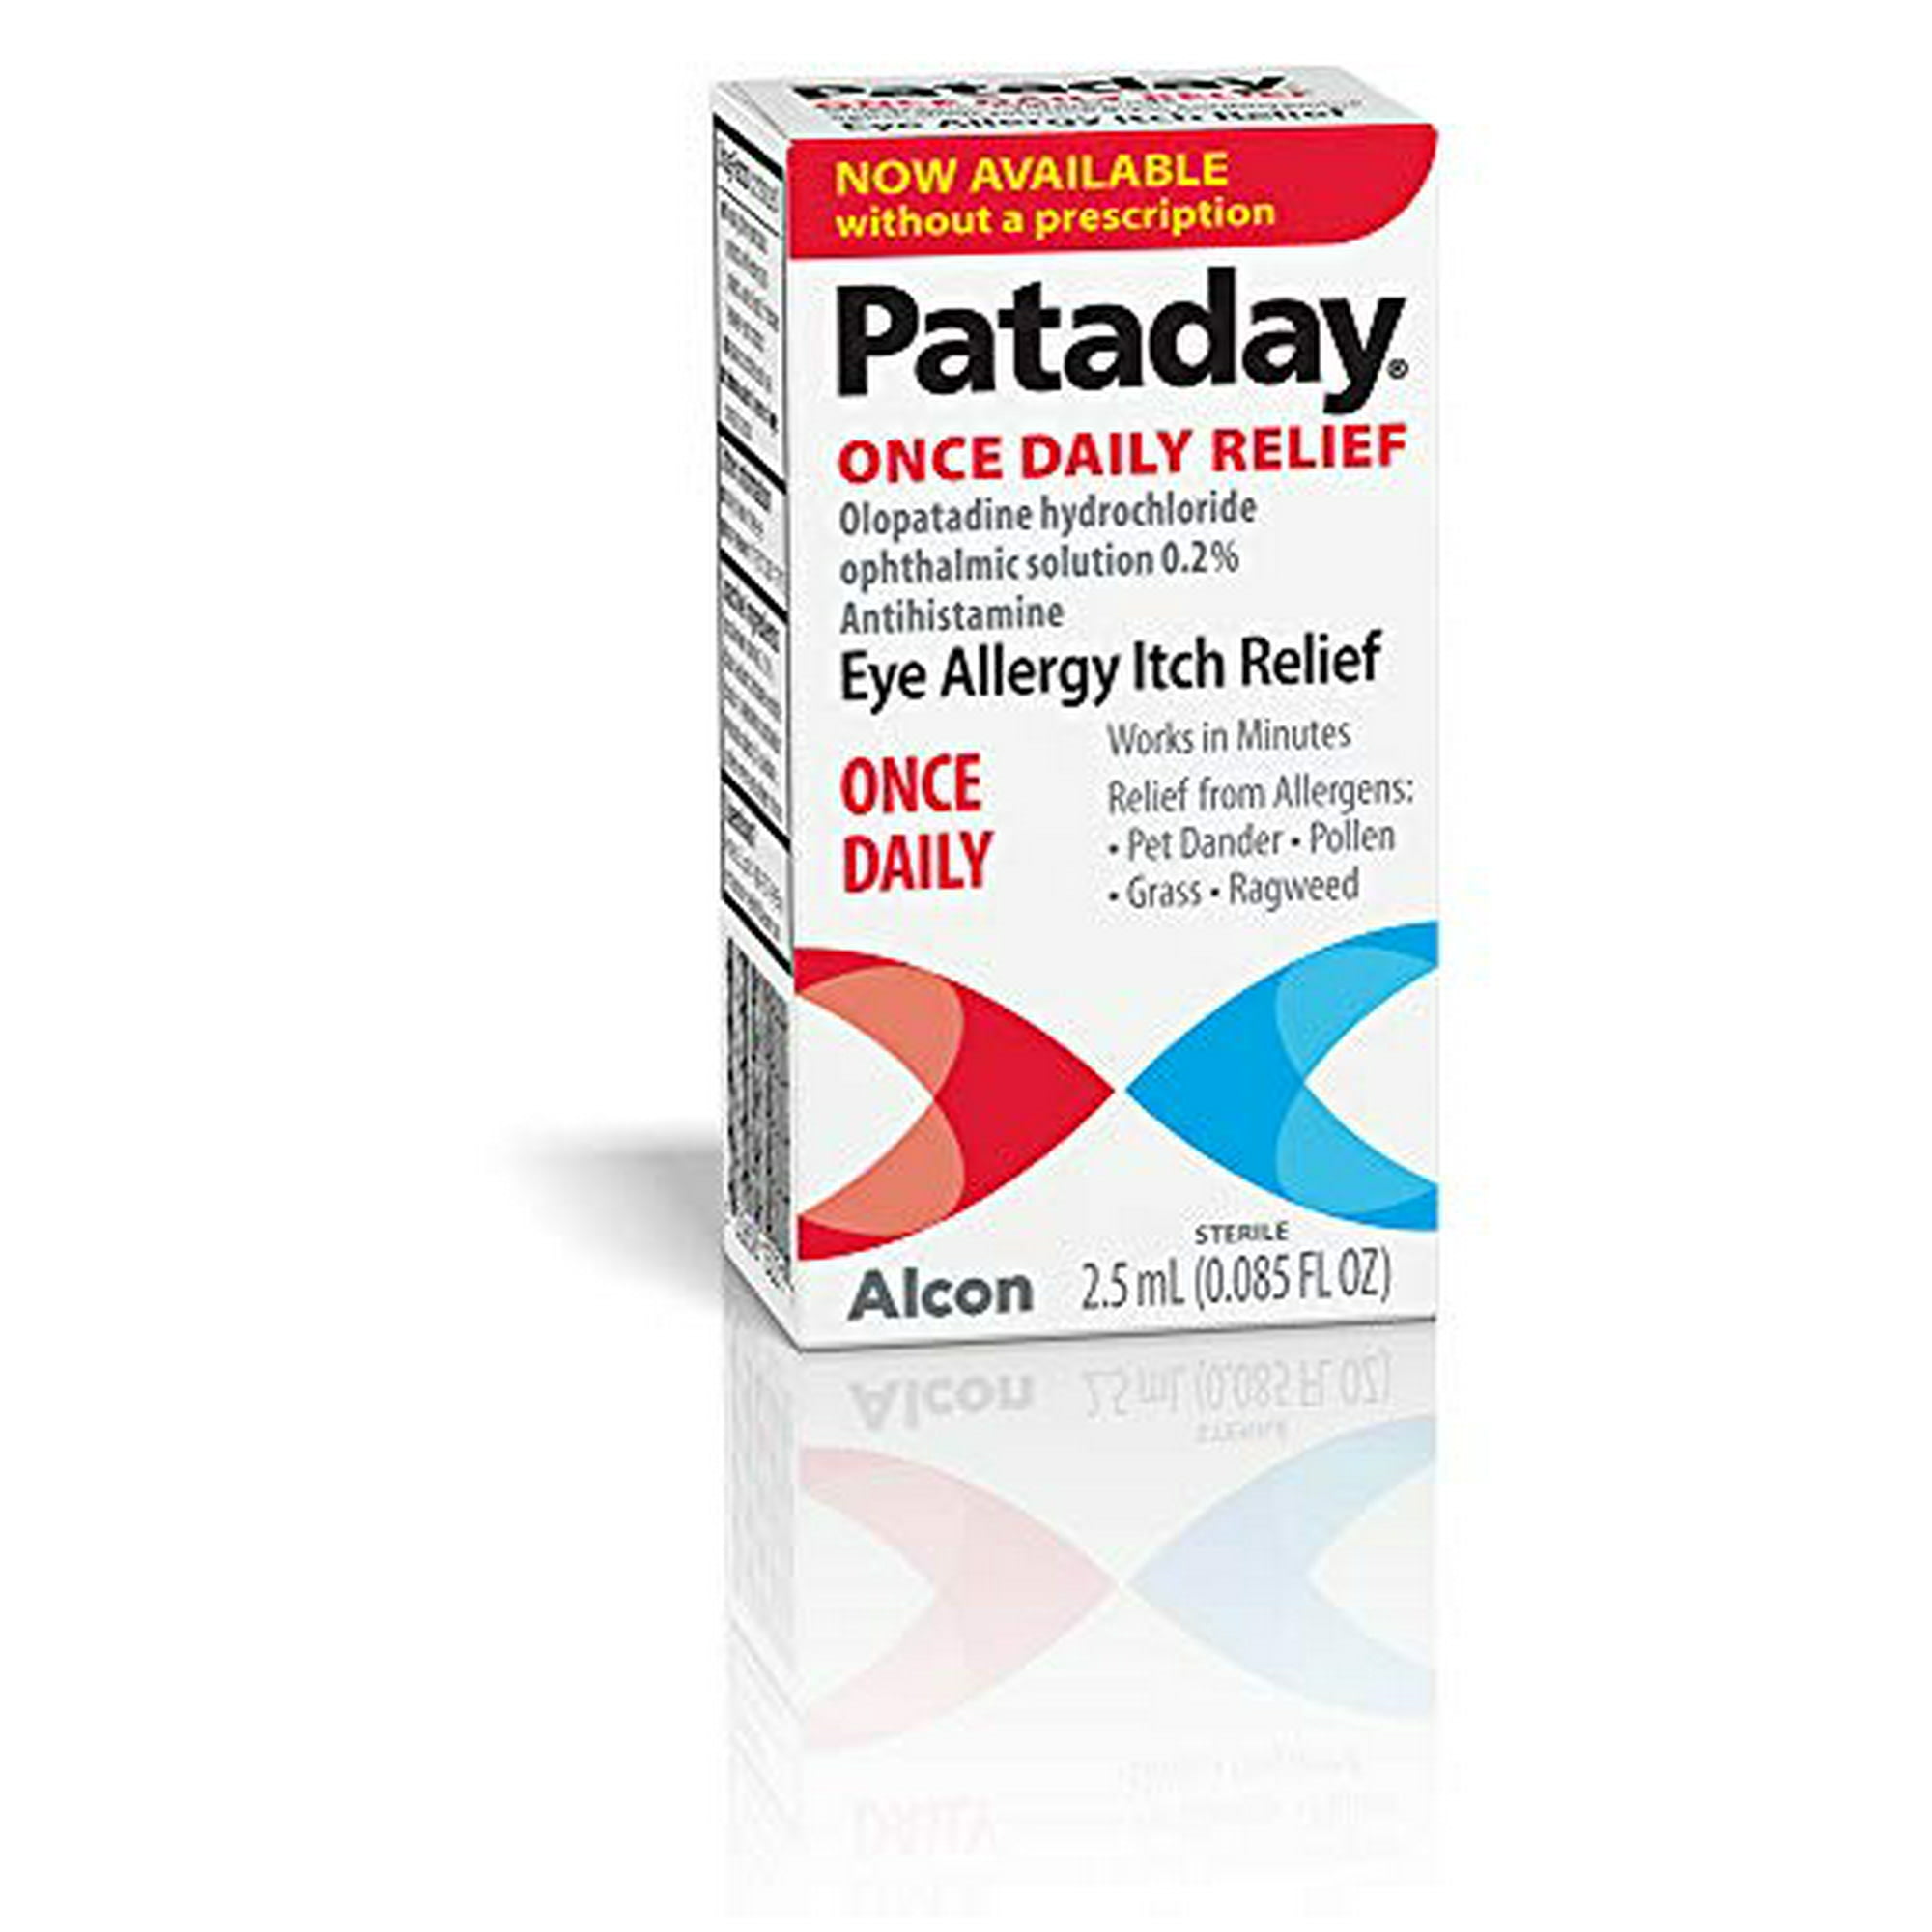 Alcon pataday discount cvs health loader jobs reviews